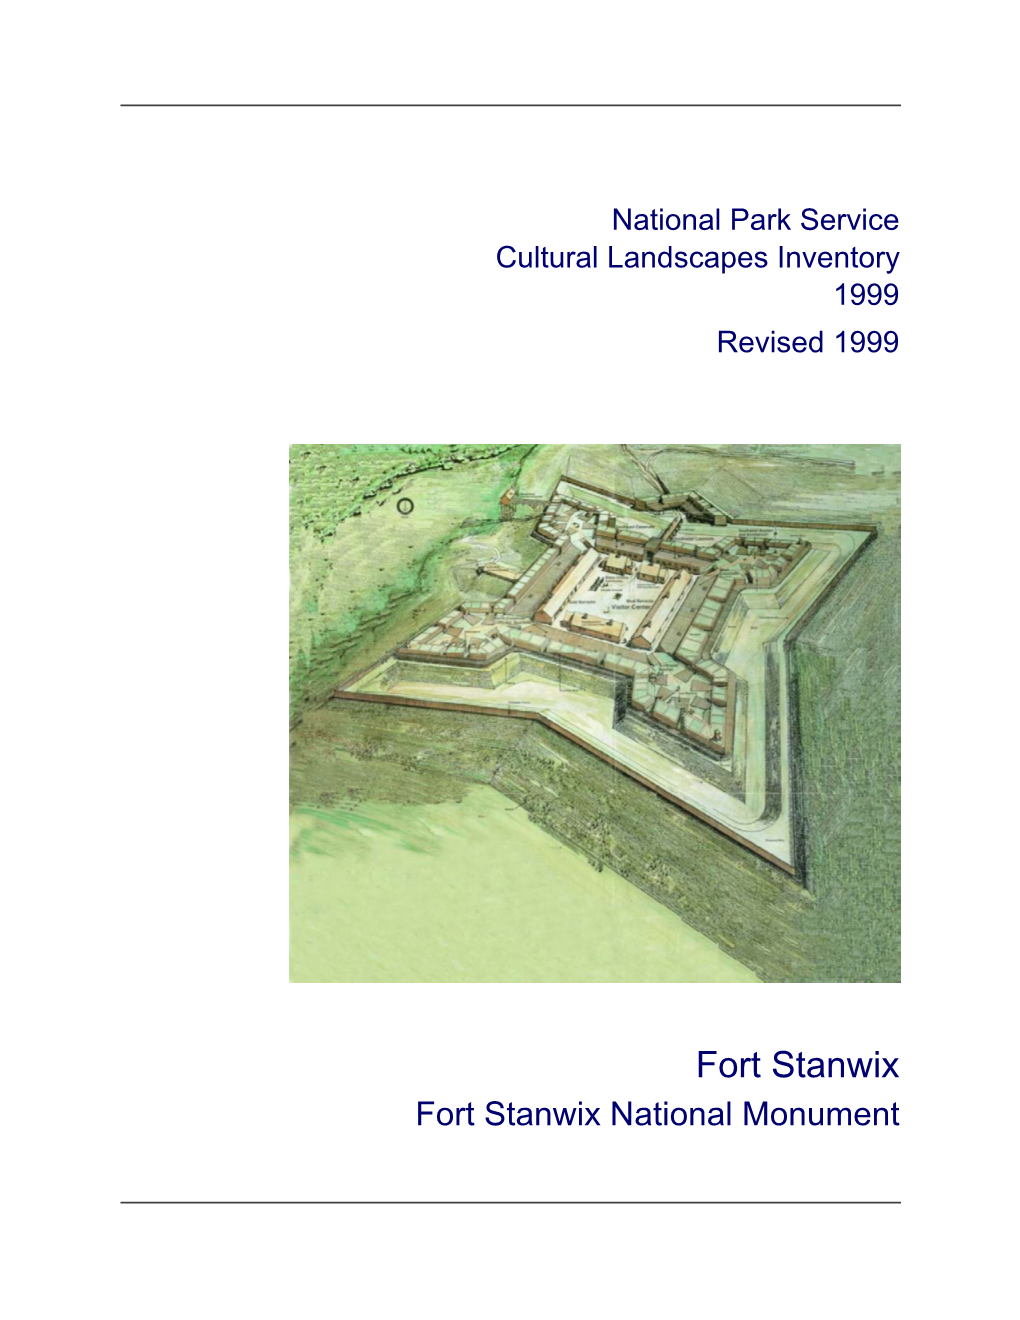 Cultural Landscapes Inventory, Fort Stanwix, Fort